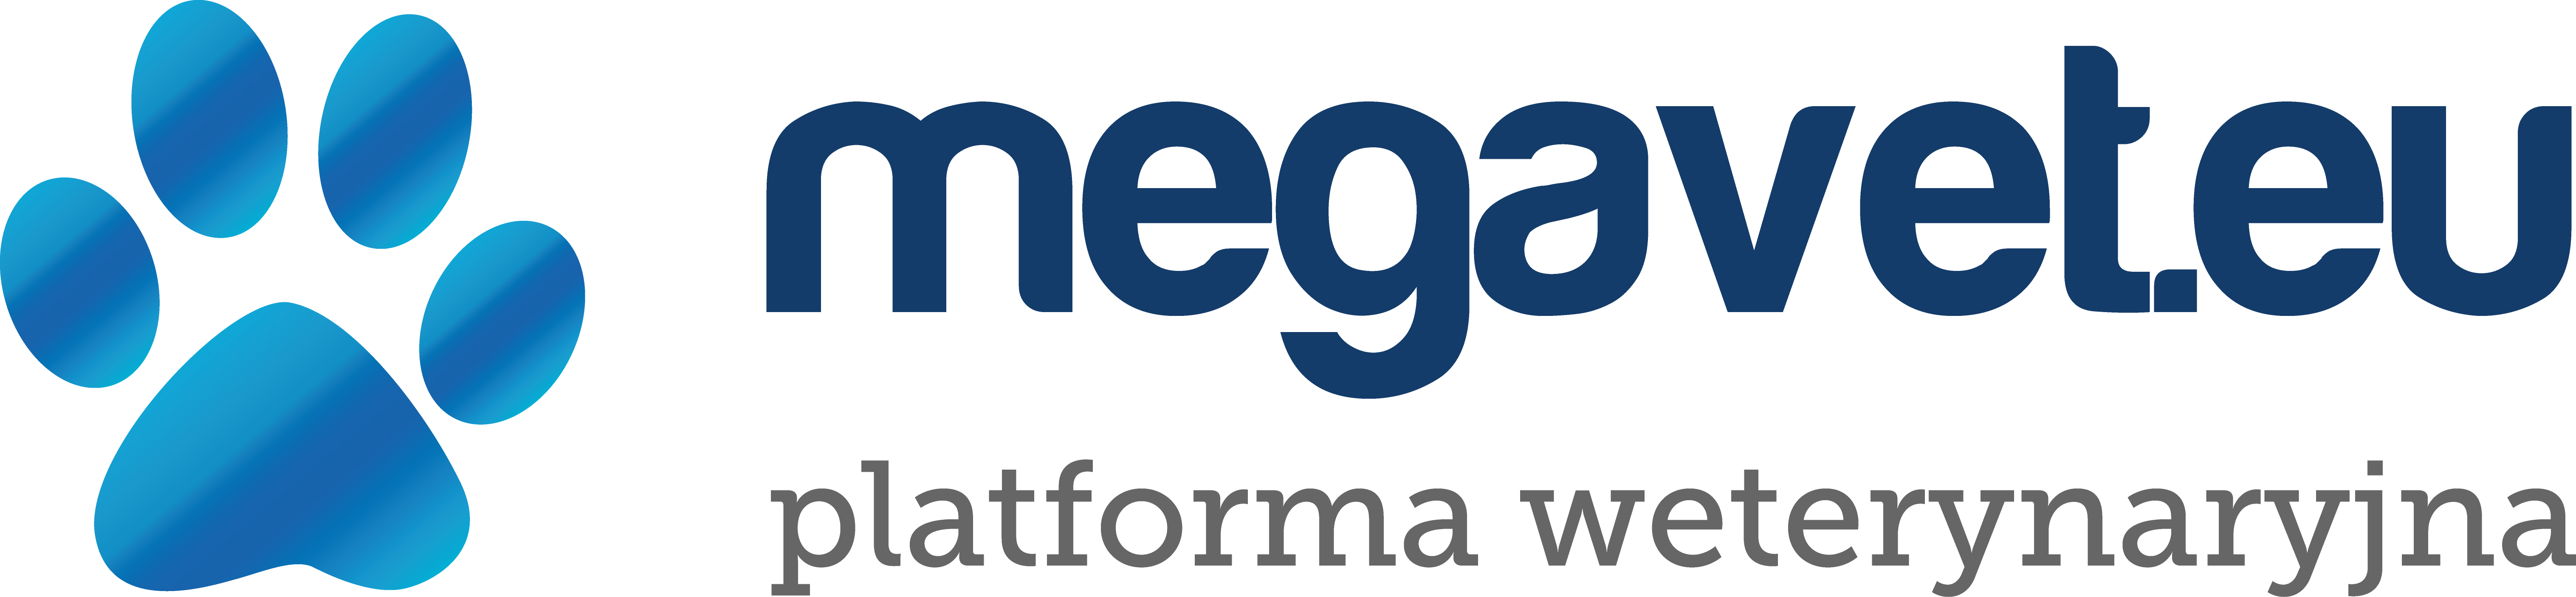  megavet.eu - platforma weterynaryjna 